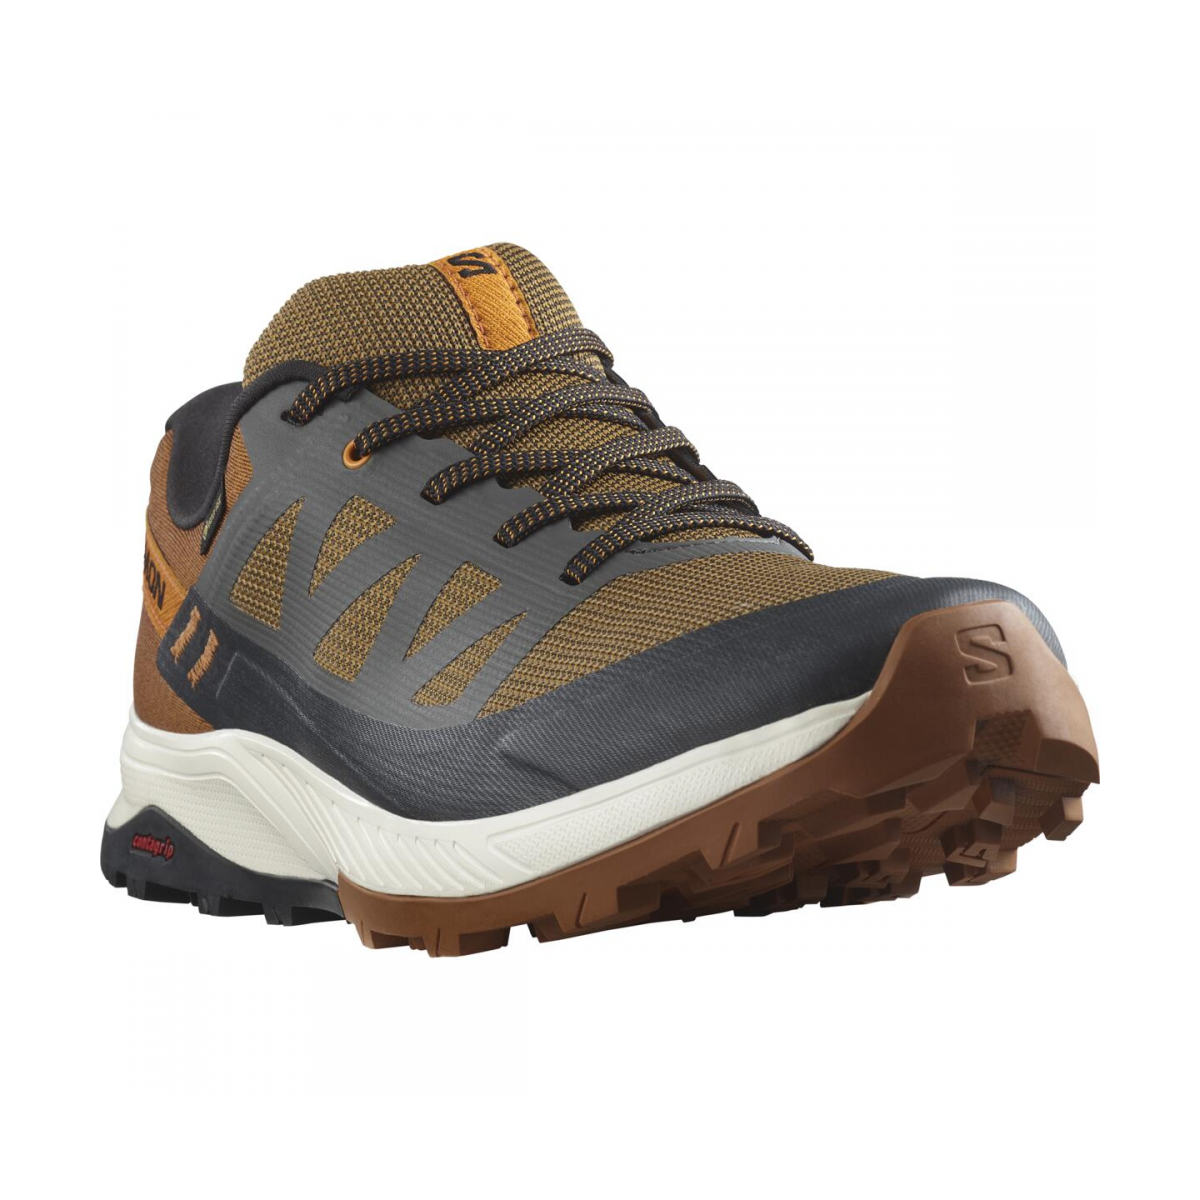 SALOMON OUTRISE GORE-TEX men's hiking shoes - brown